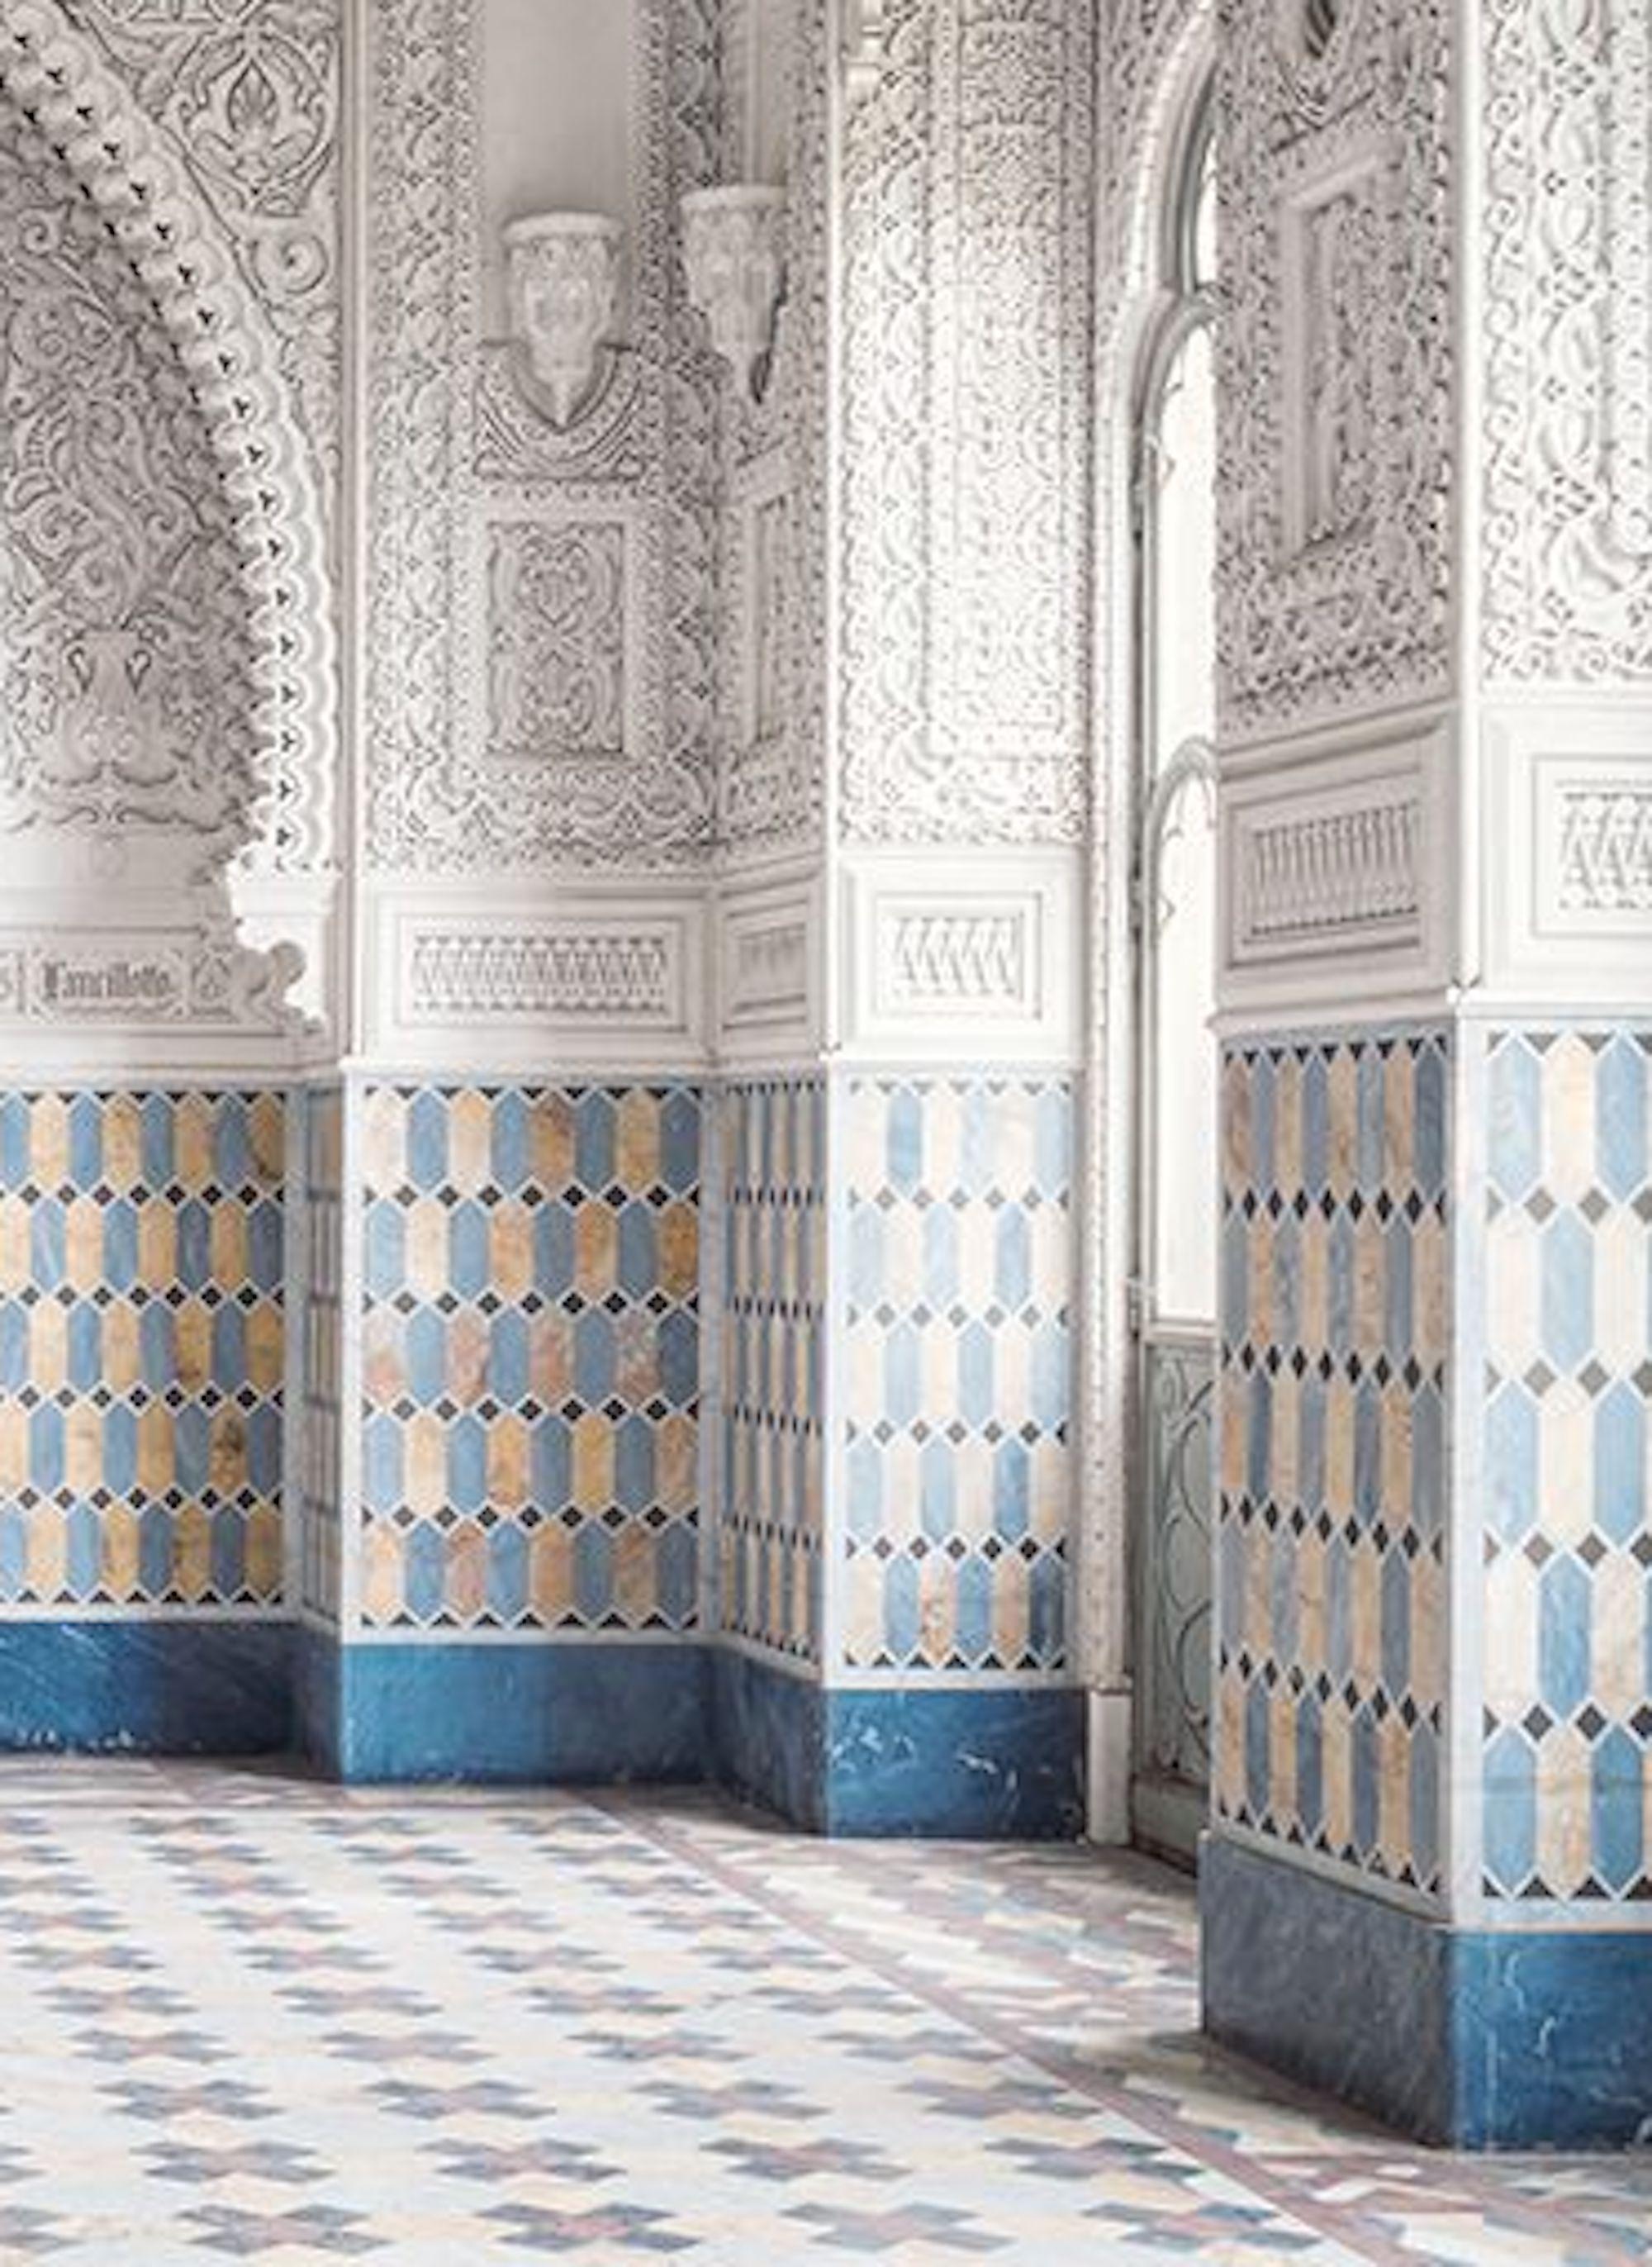 Arabesque by Gina Soden - Interior photography, Moorish architecture, urbex For Sale 1